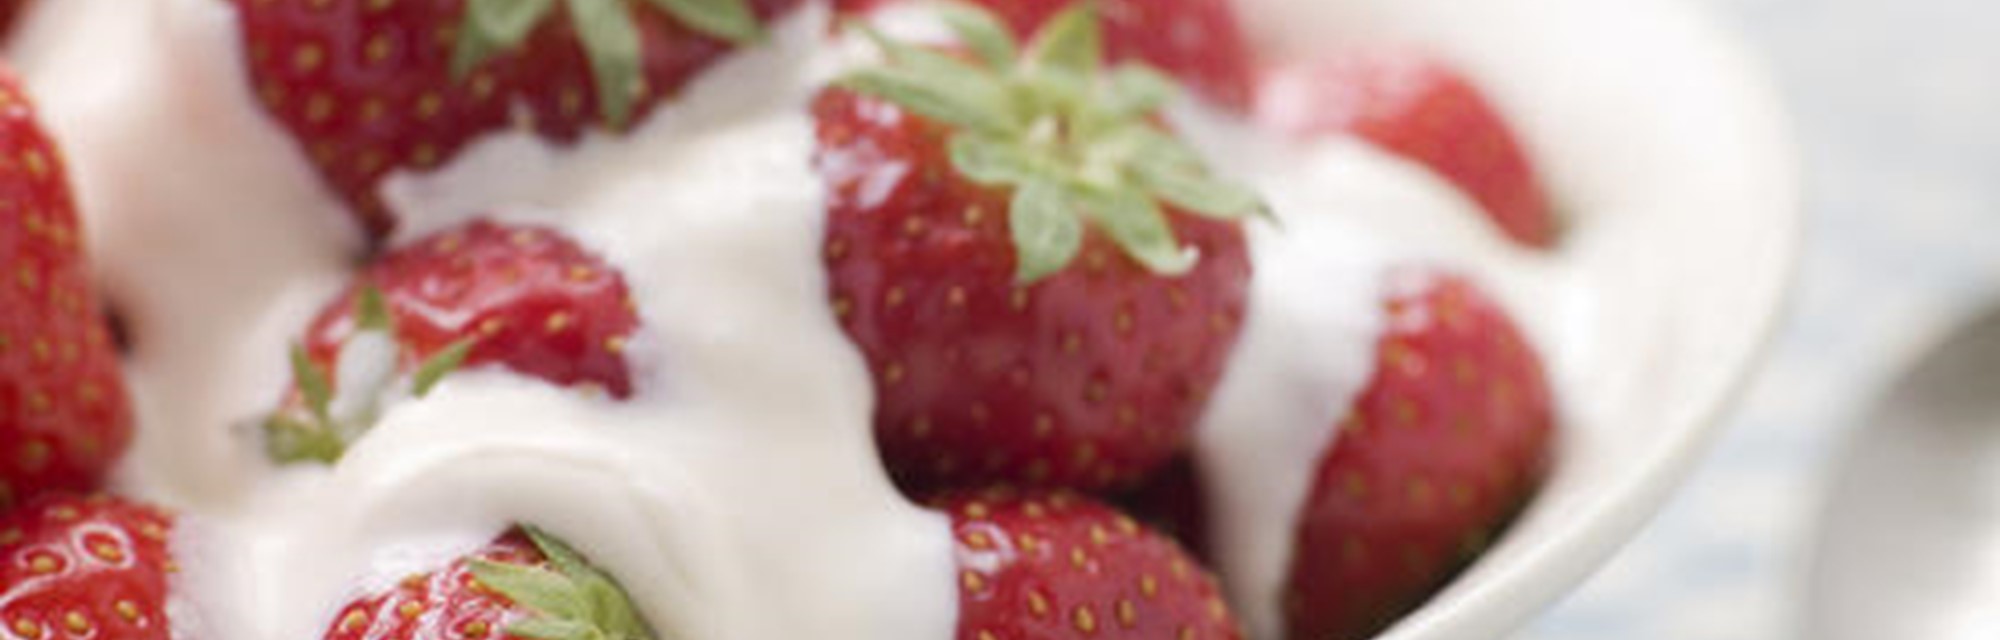 How to make the best strawberries & cream